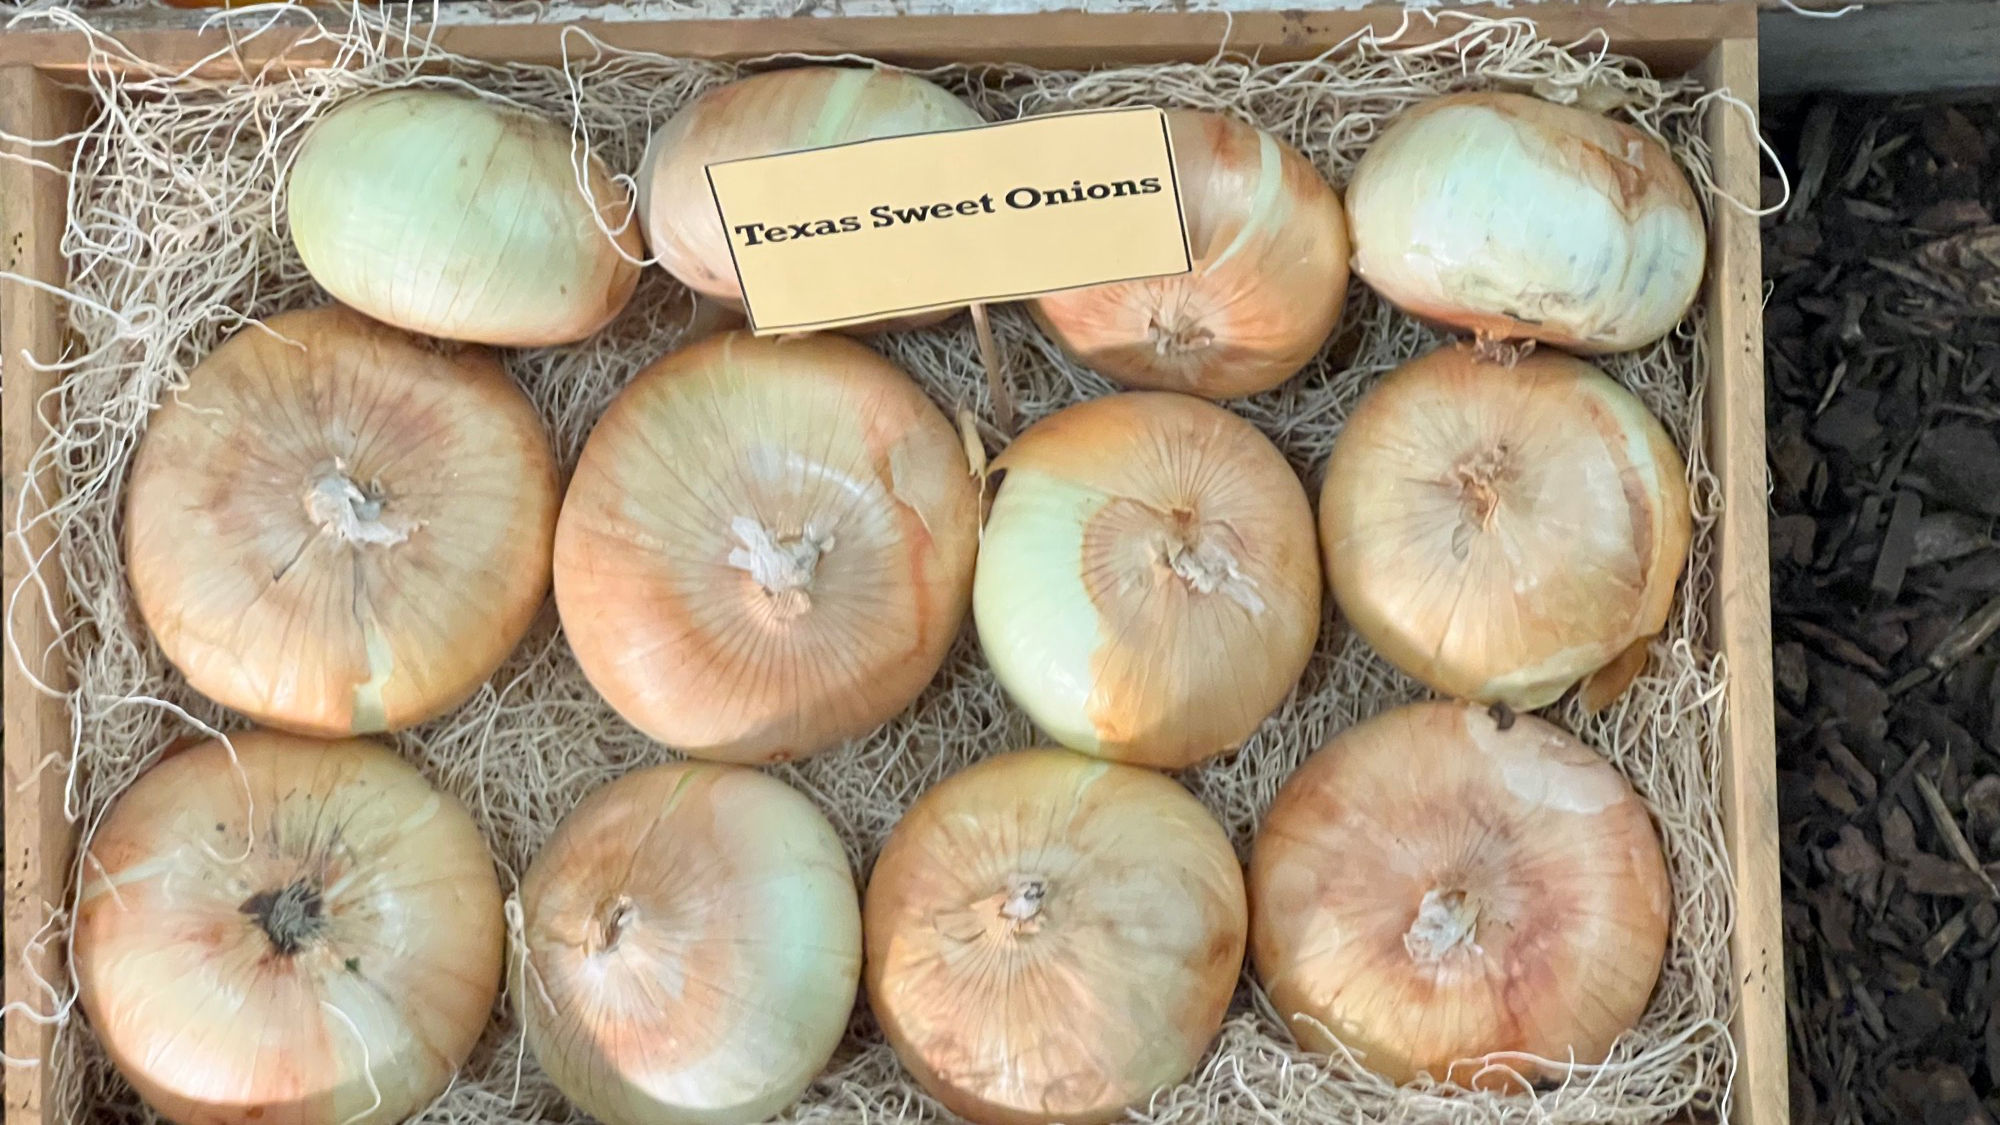 Underwood Family Farms Texas Sweet Onions